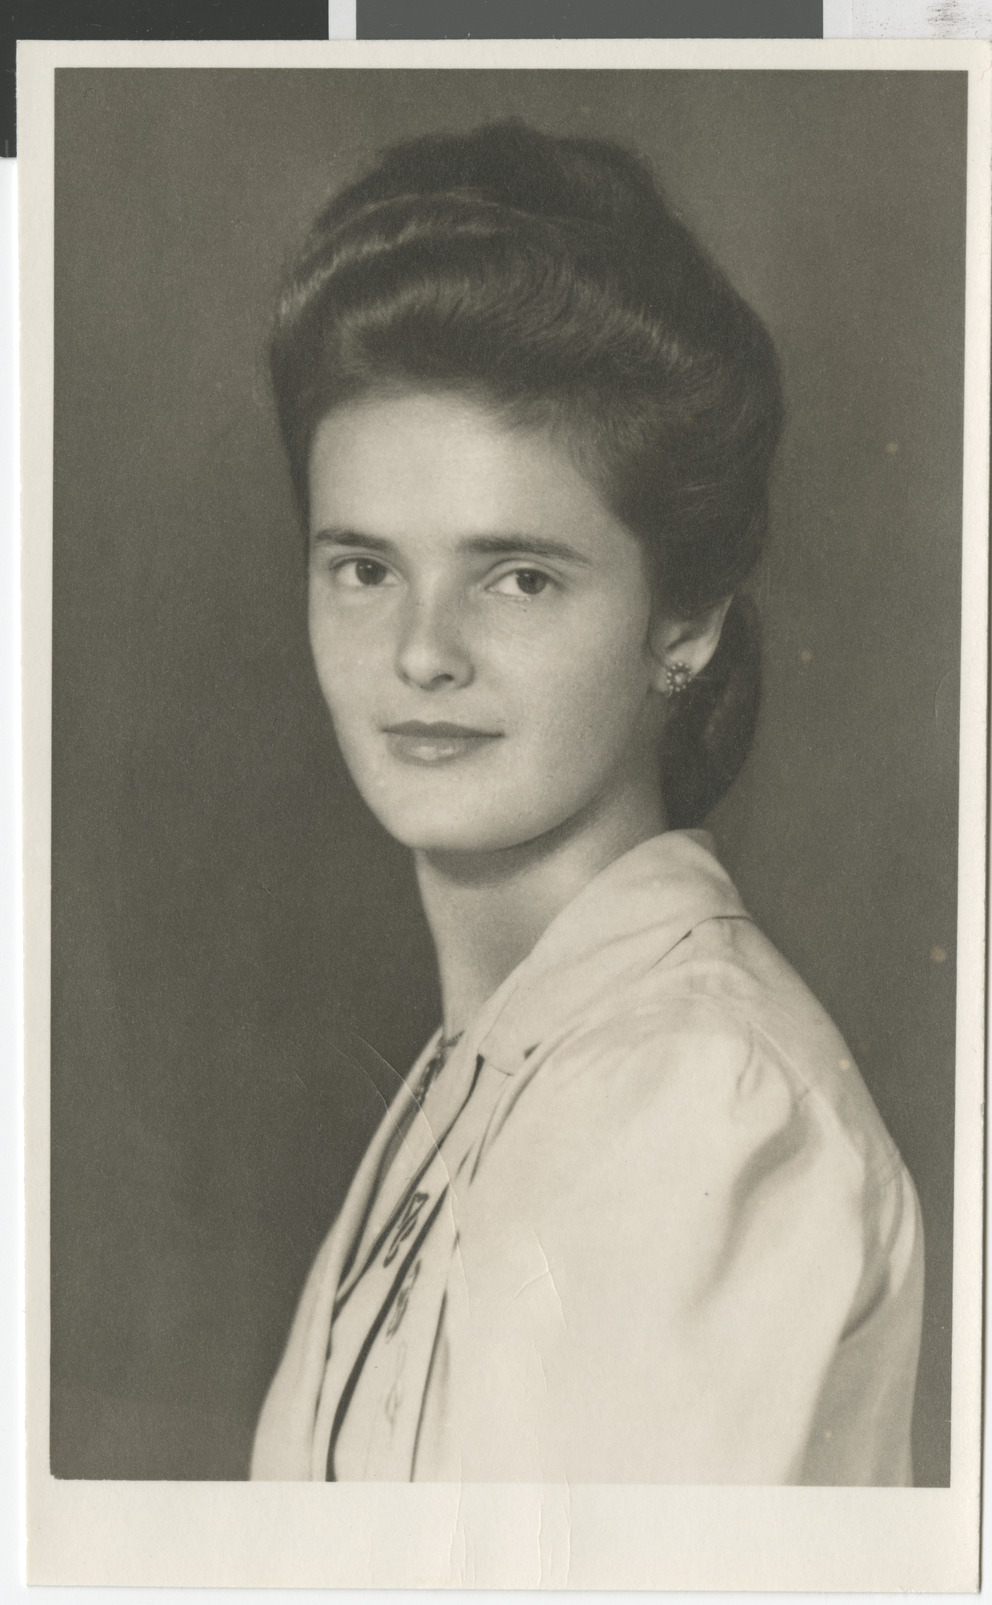 Postcard with photographic portrait of Bella Stern, circa 1950